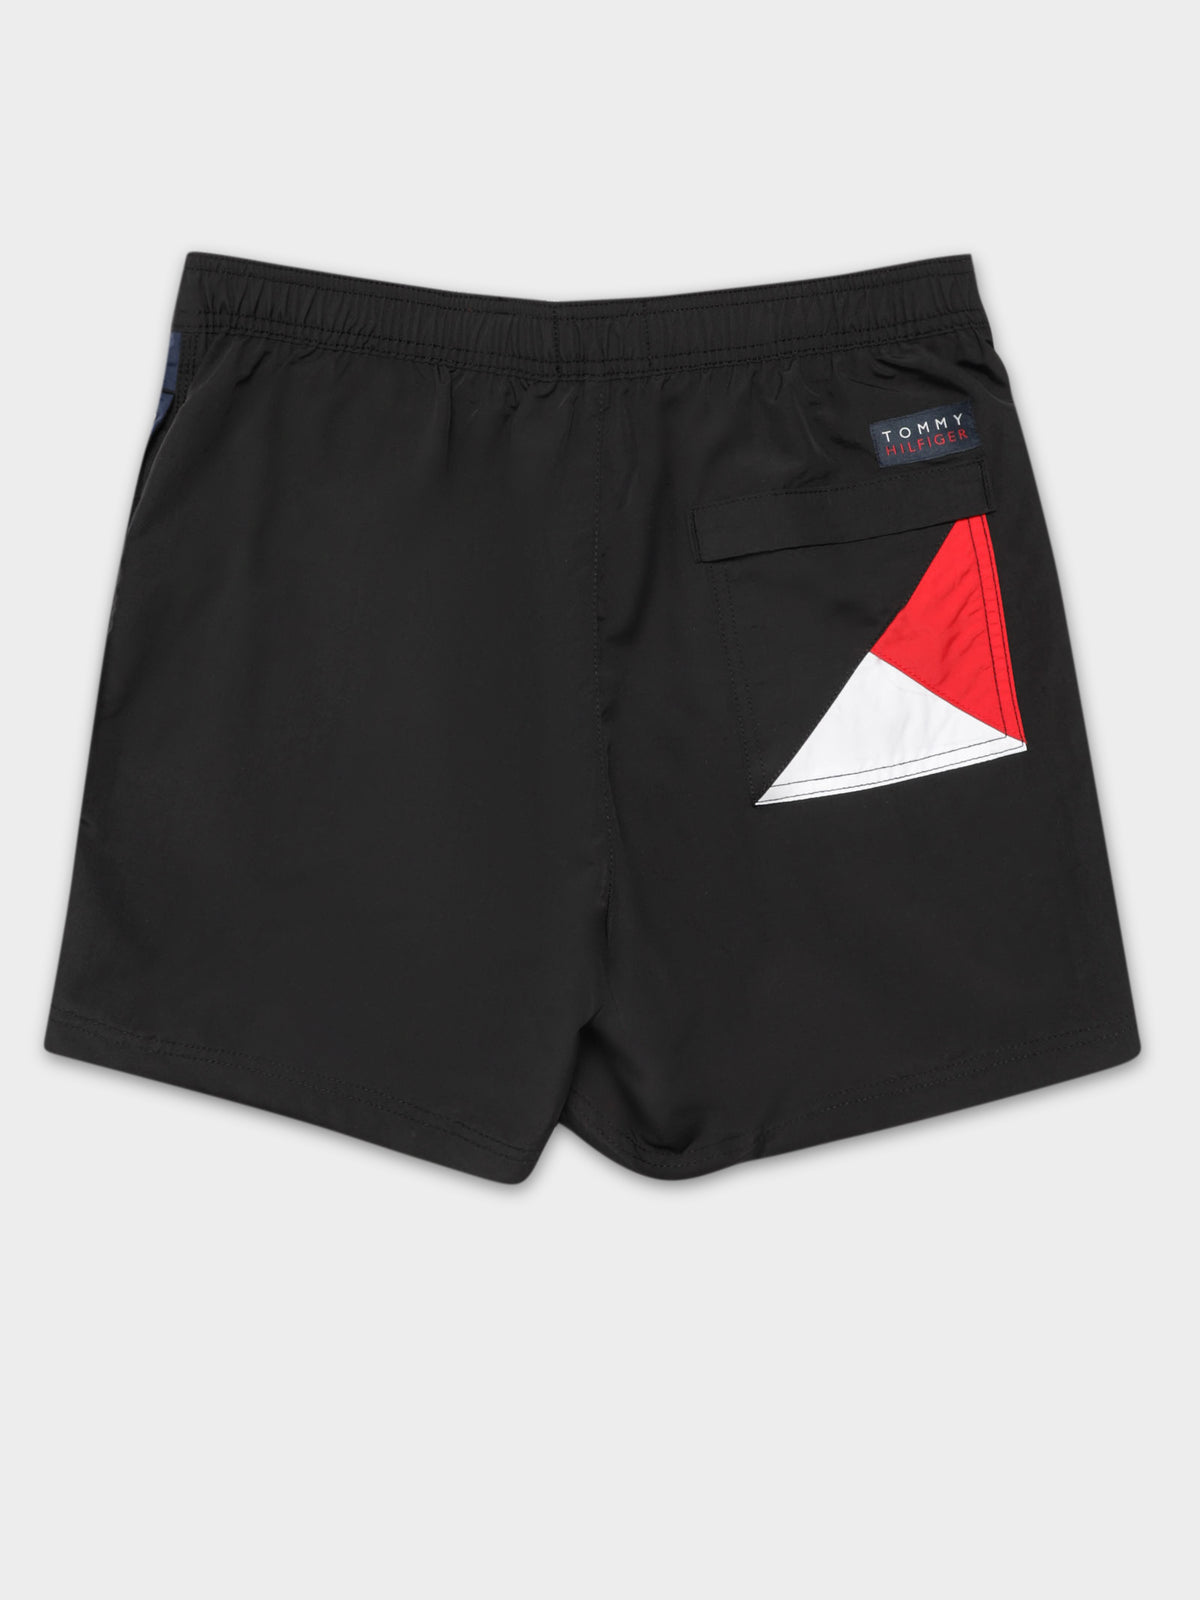 Flag Leg Swim Shorts in Black